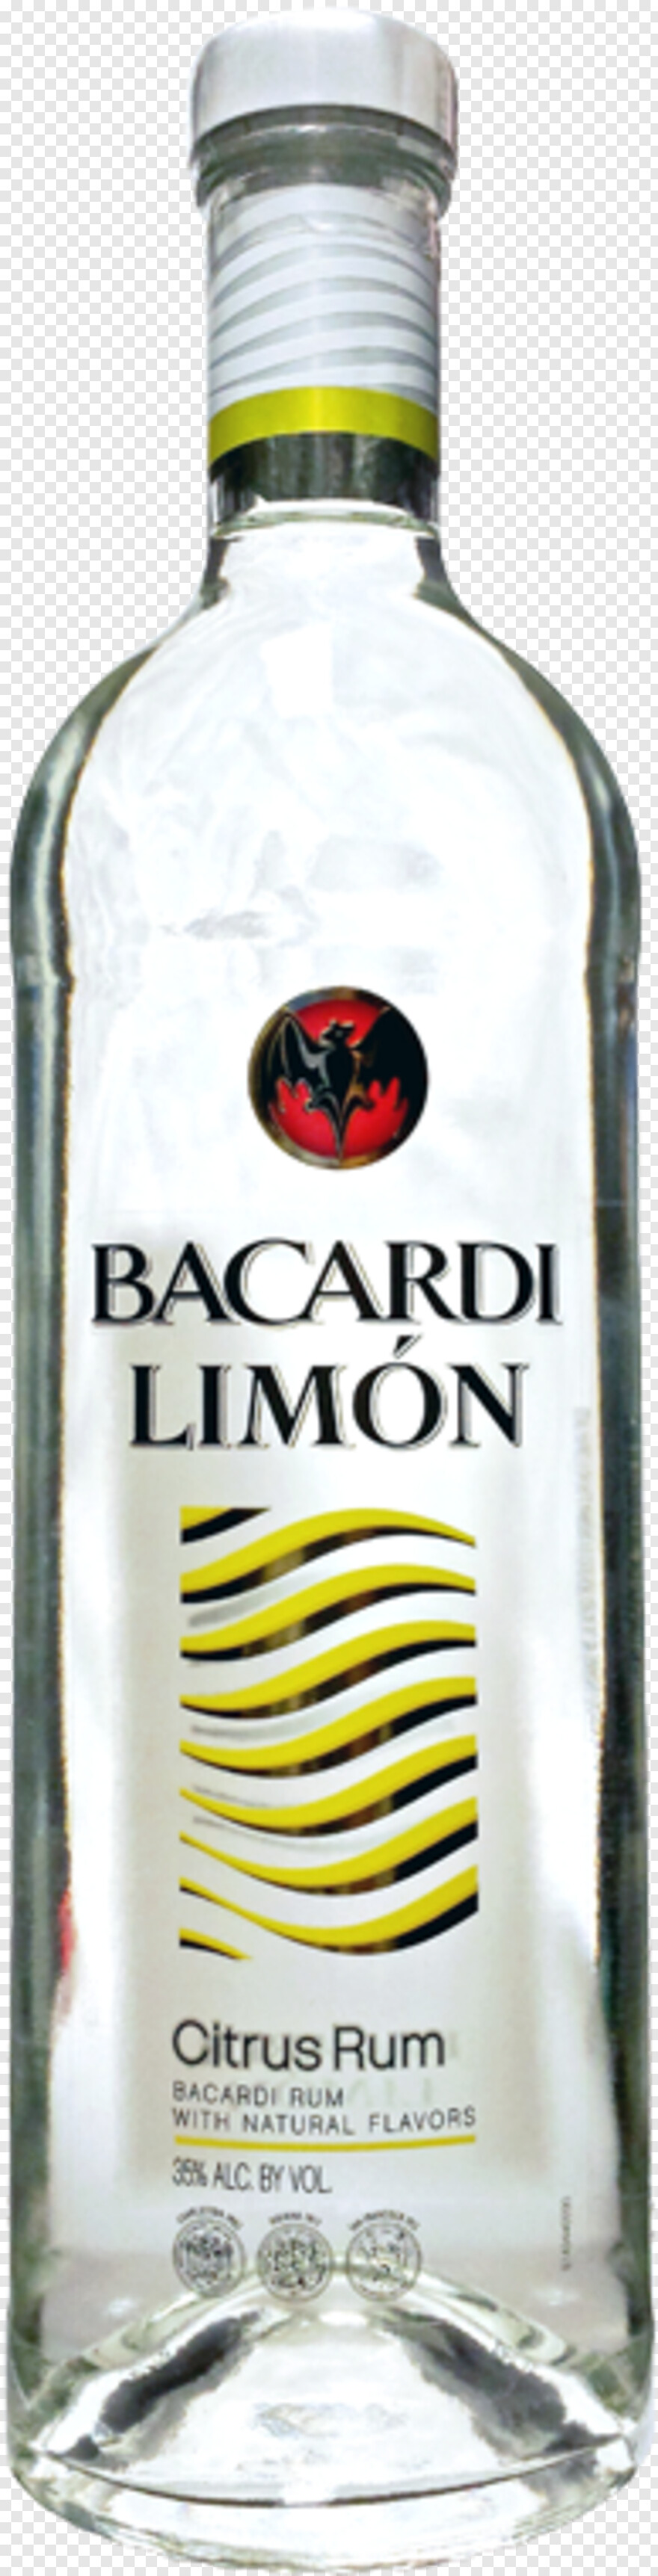 bacardi-logo # 366477